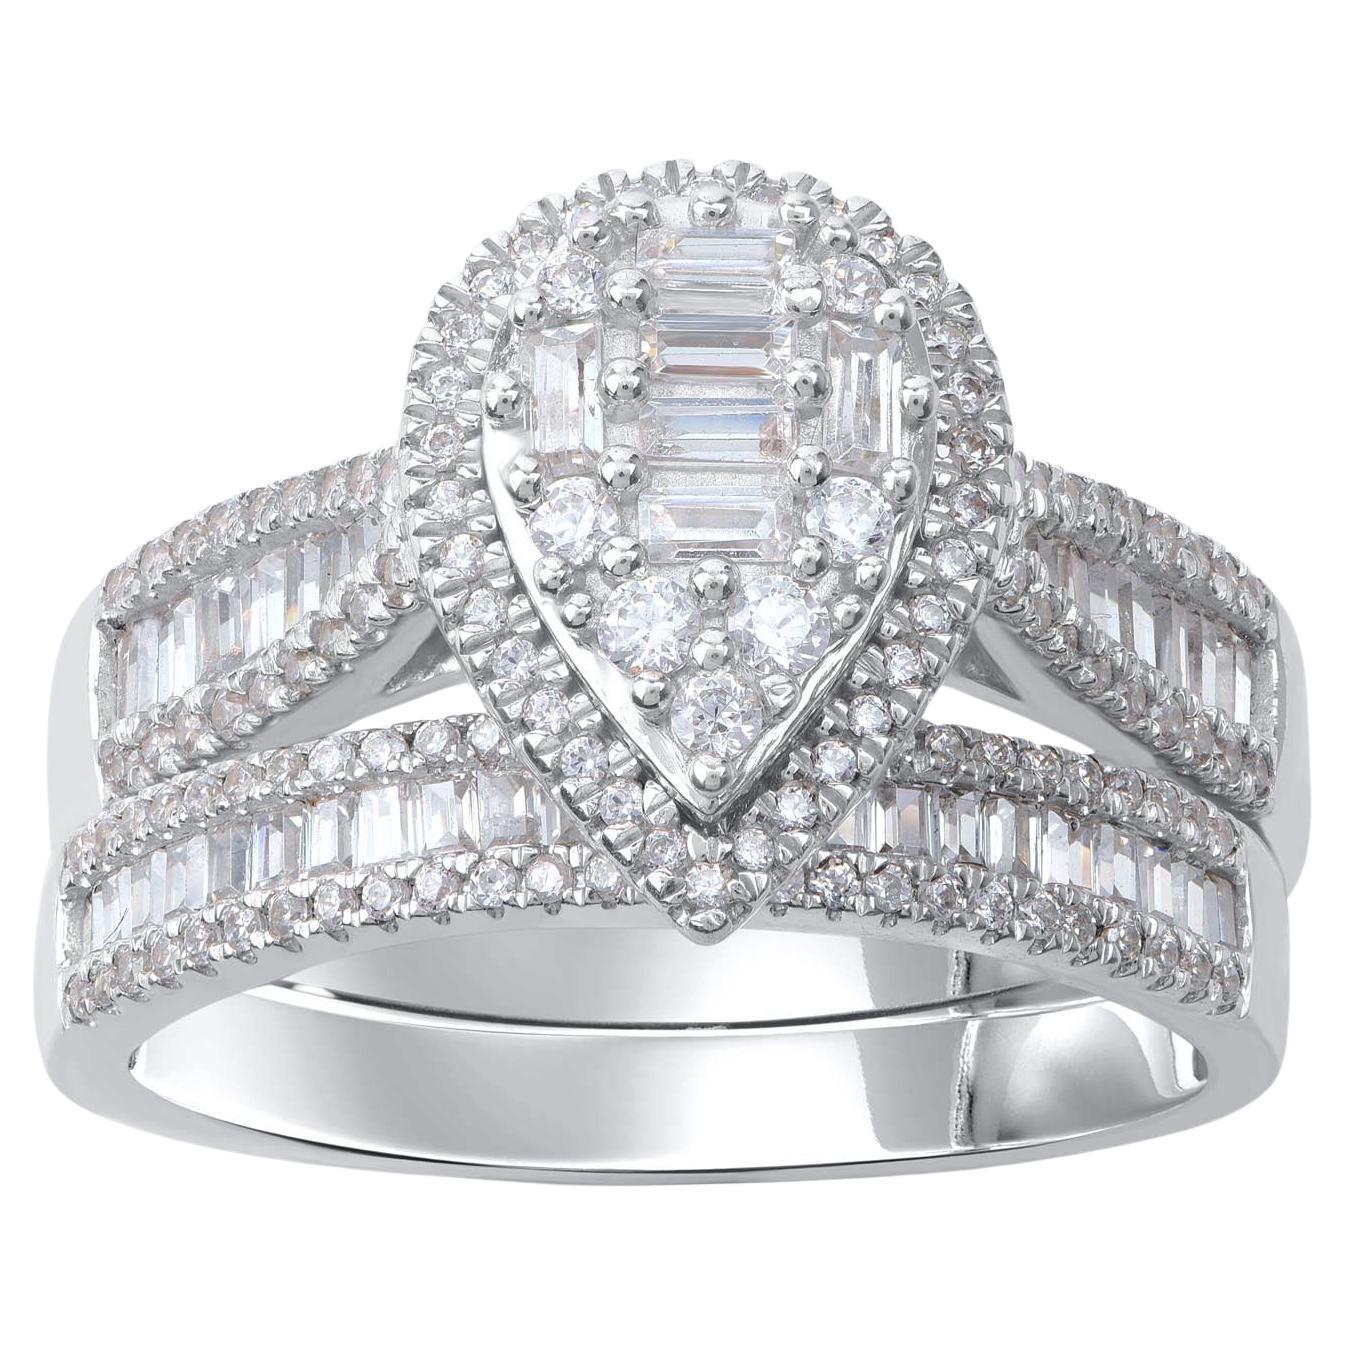 TJD 1.0 Carat Natural Diamond 14 Karat White Gold Pear Shape Bridal Ring Set For Sale